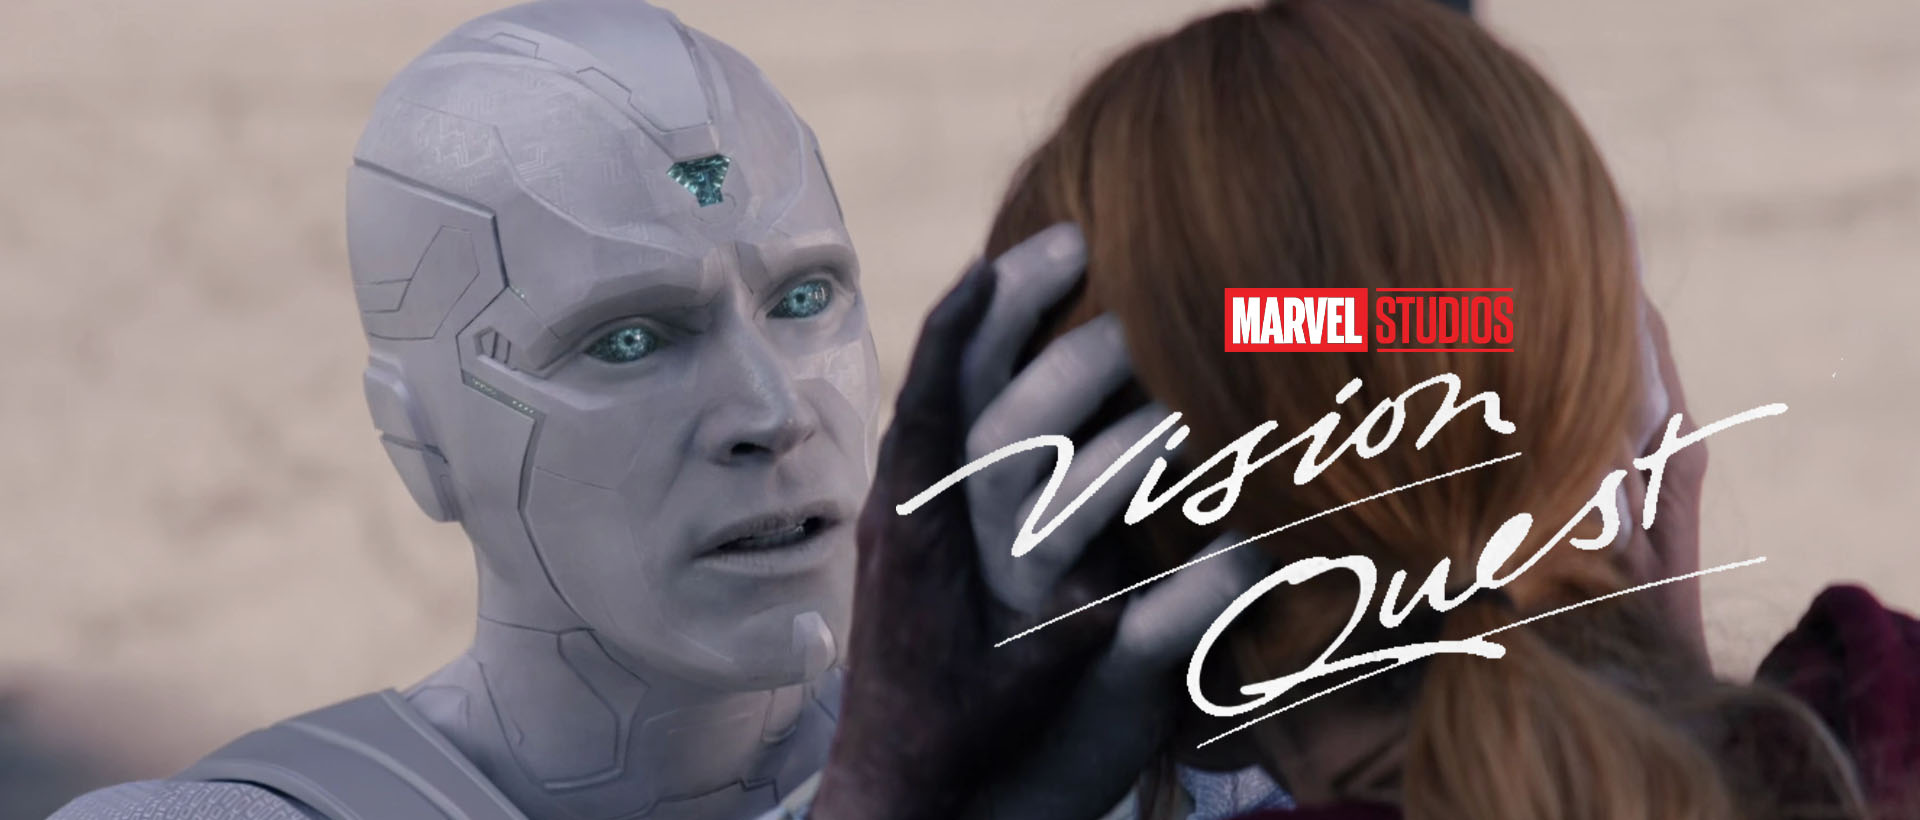 Vision quest Marvel studios series banner